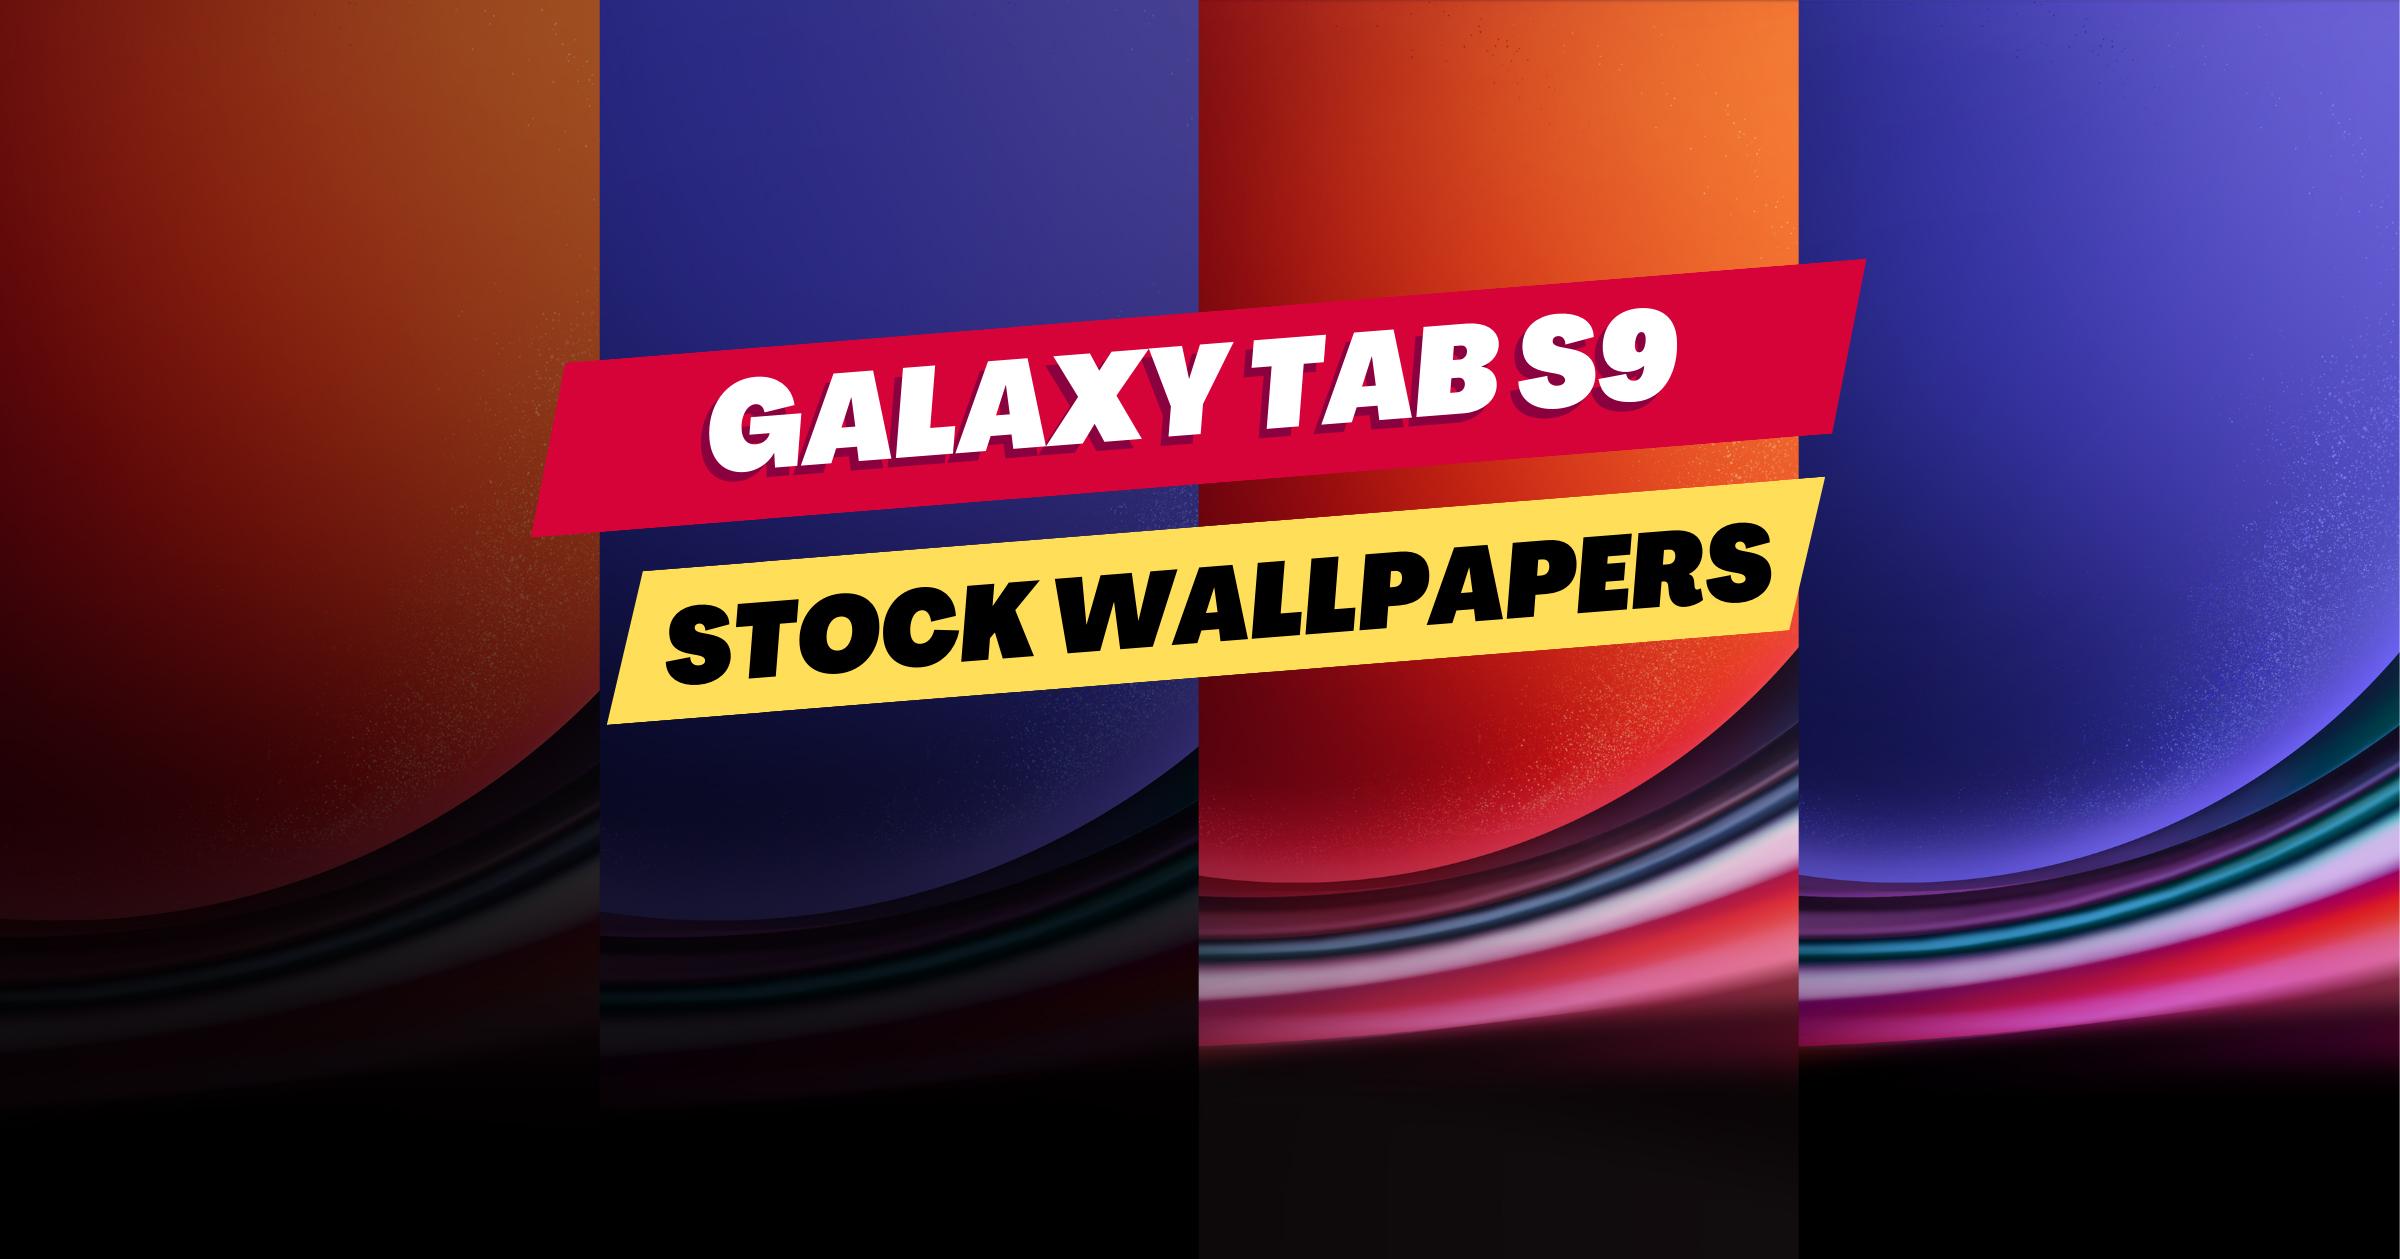 Samsung Galaxy Tab S9 Wallpaper FHD